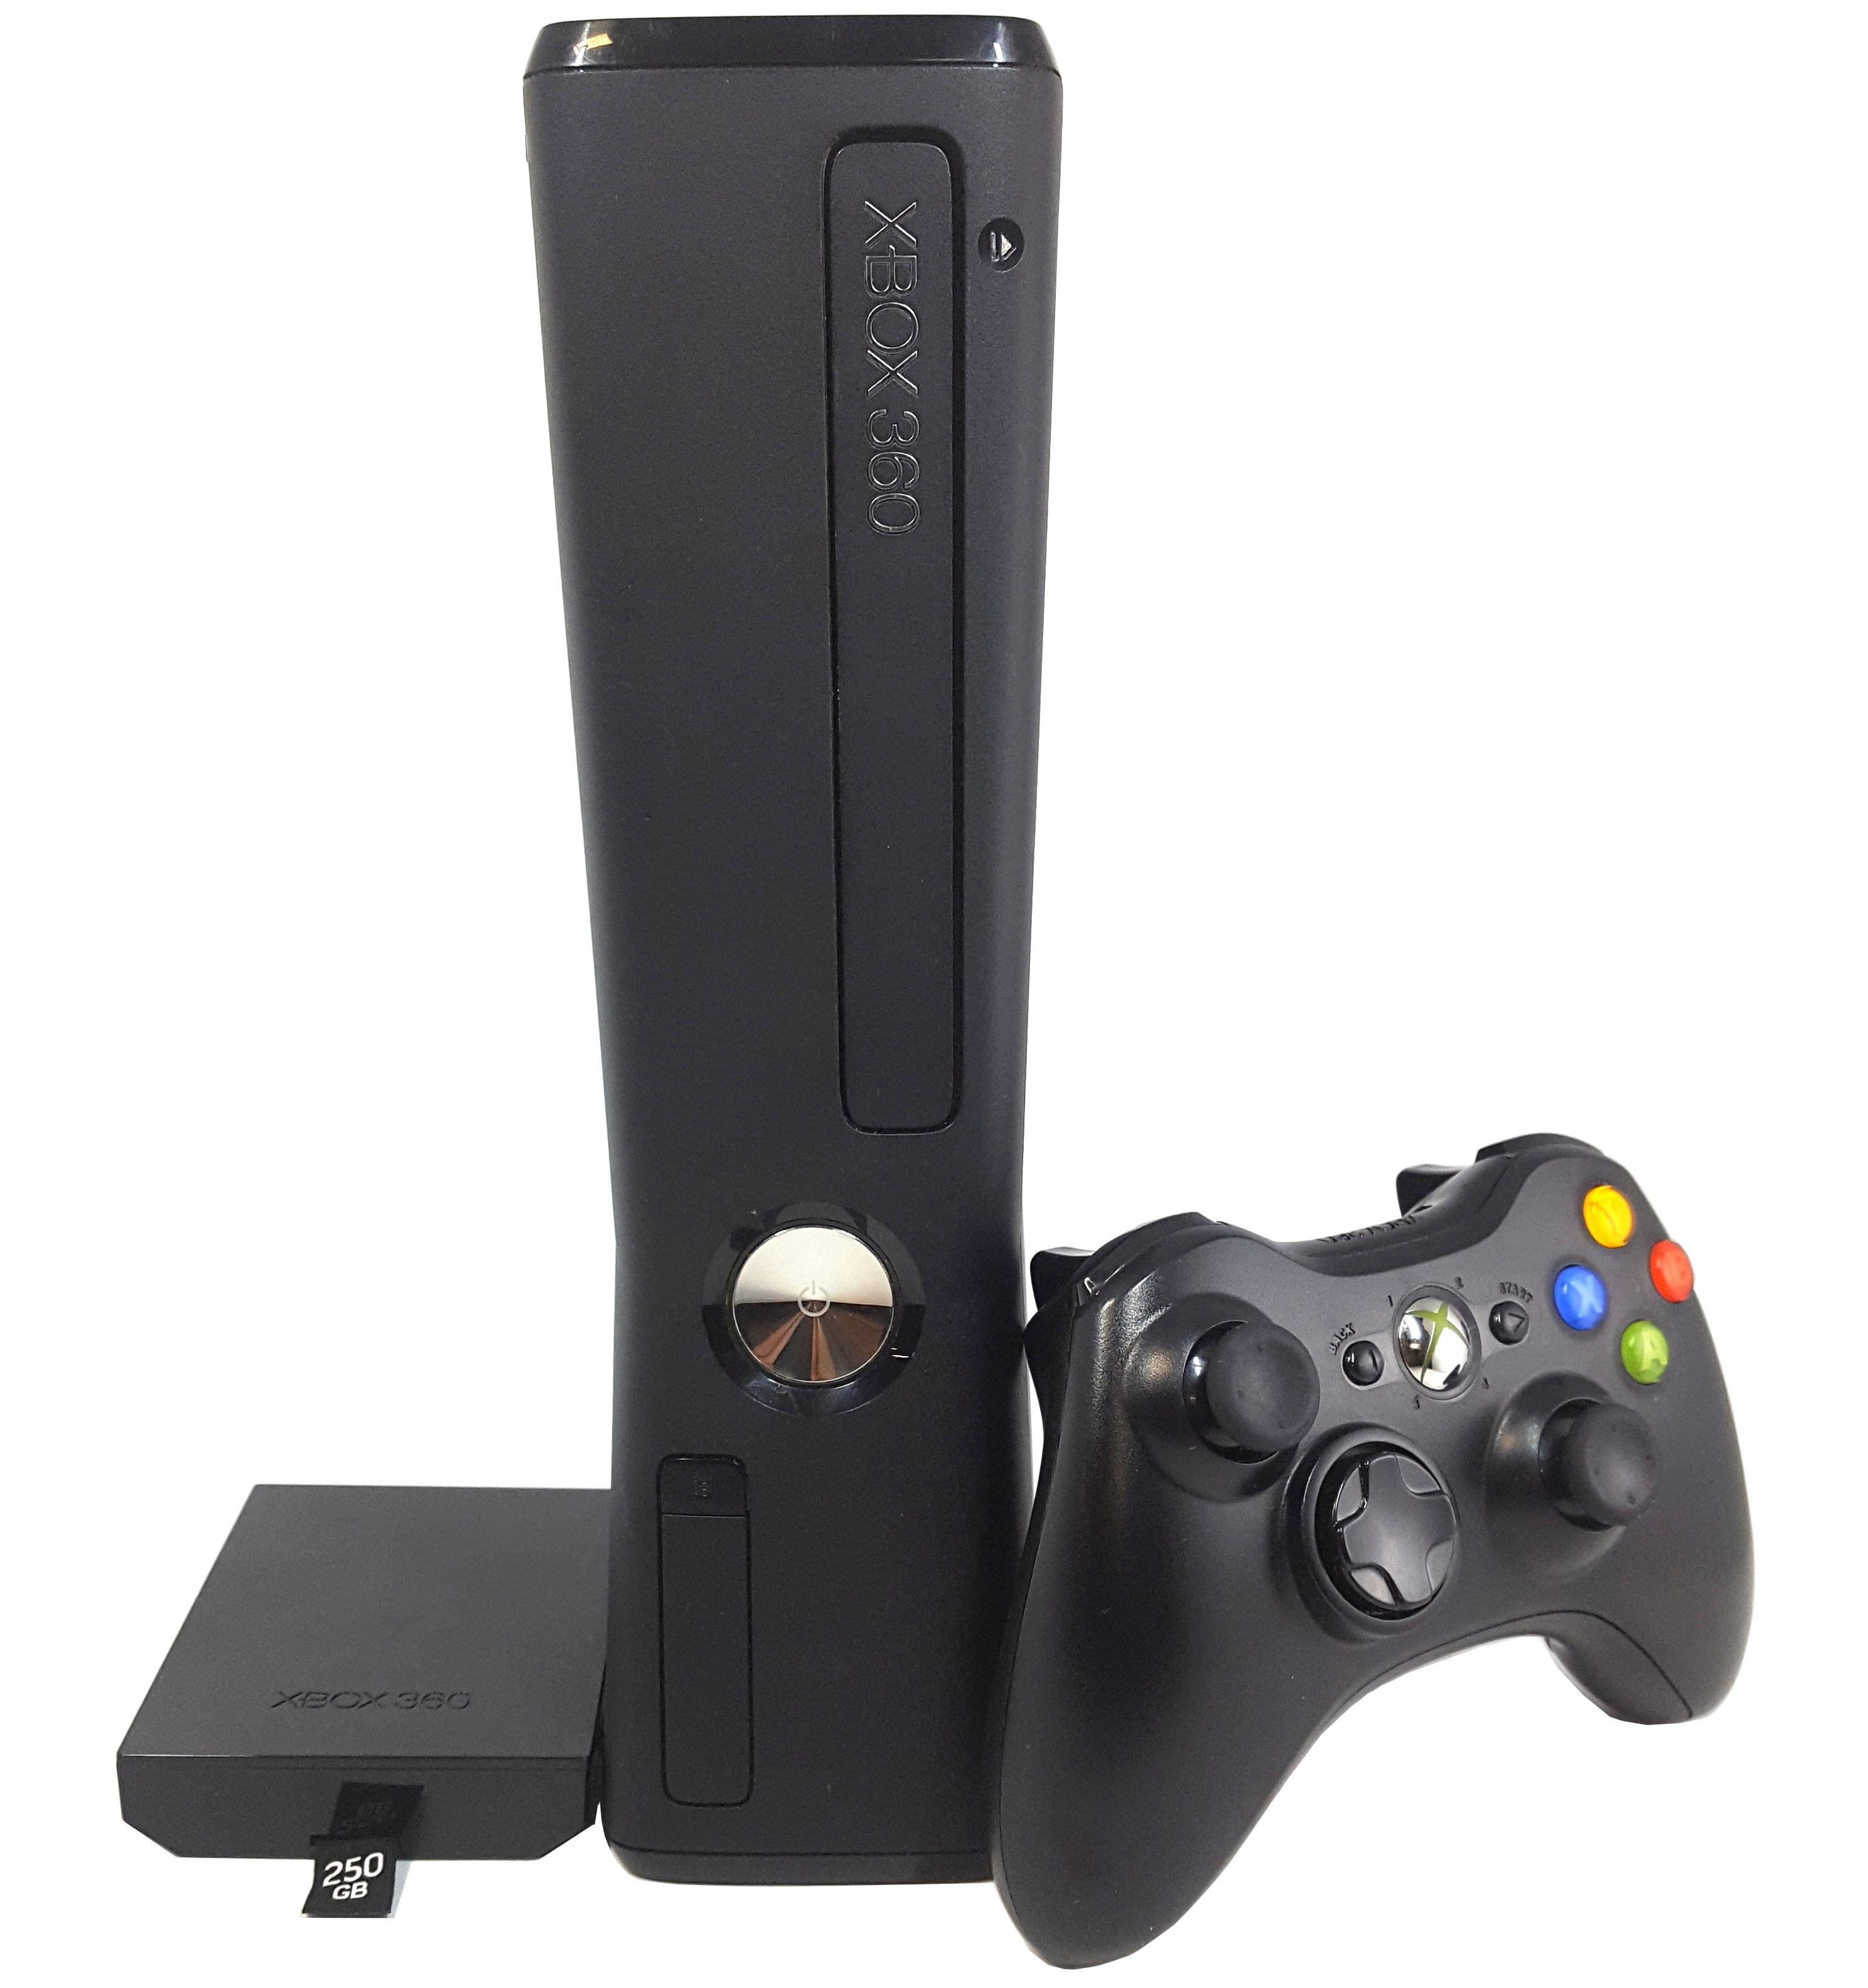 Microsoft Xbox Slim 250GB Video Game Console Black Controller HDMI (Refurbished) Walmart.com